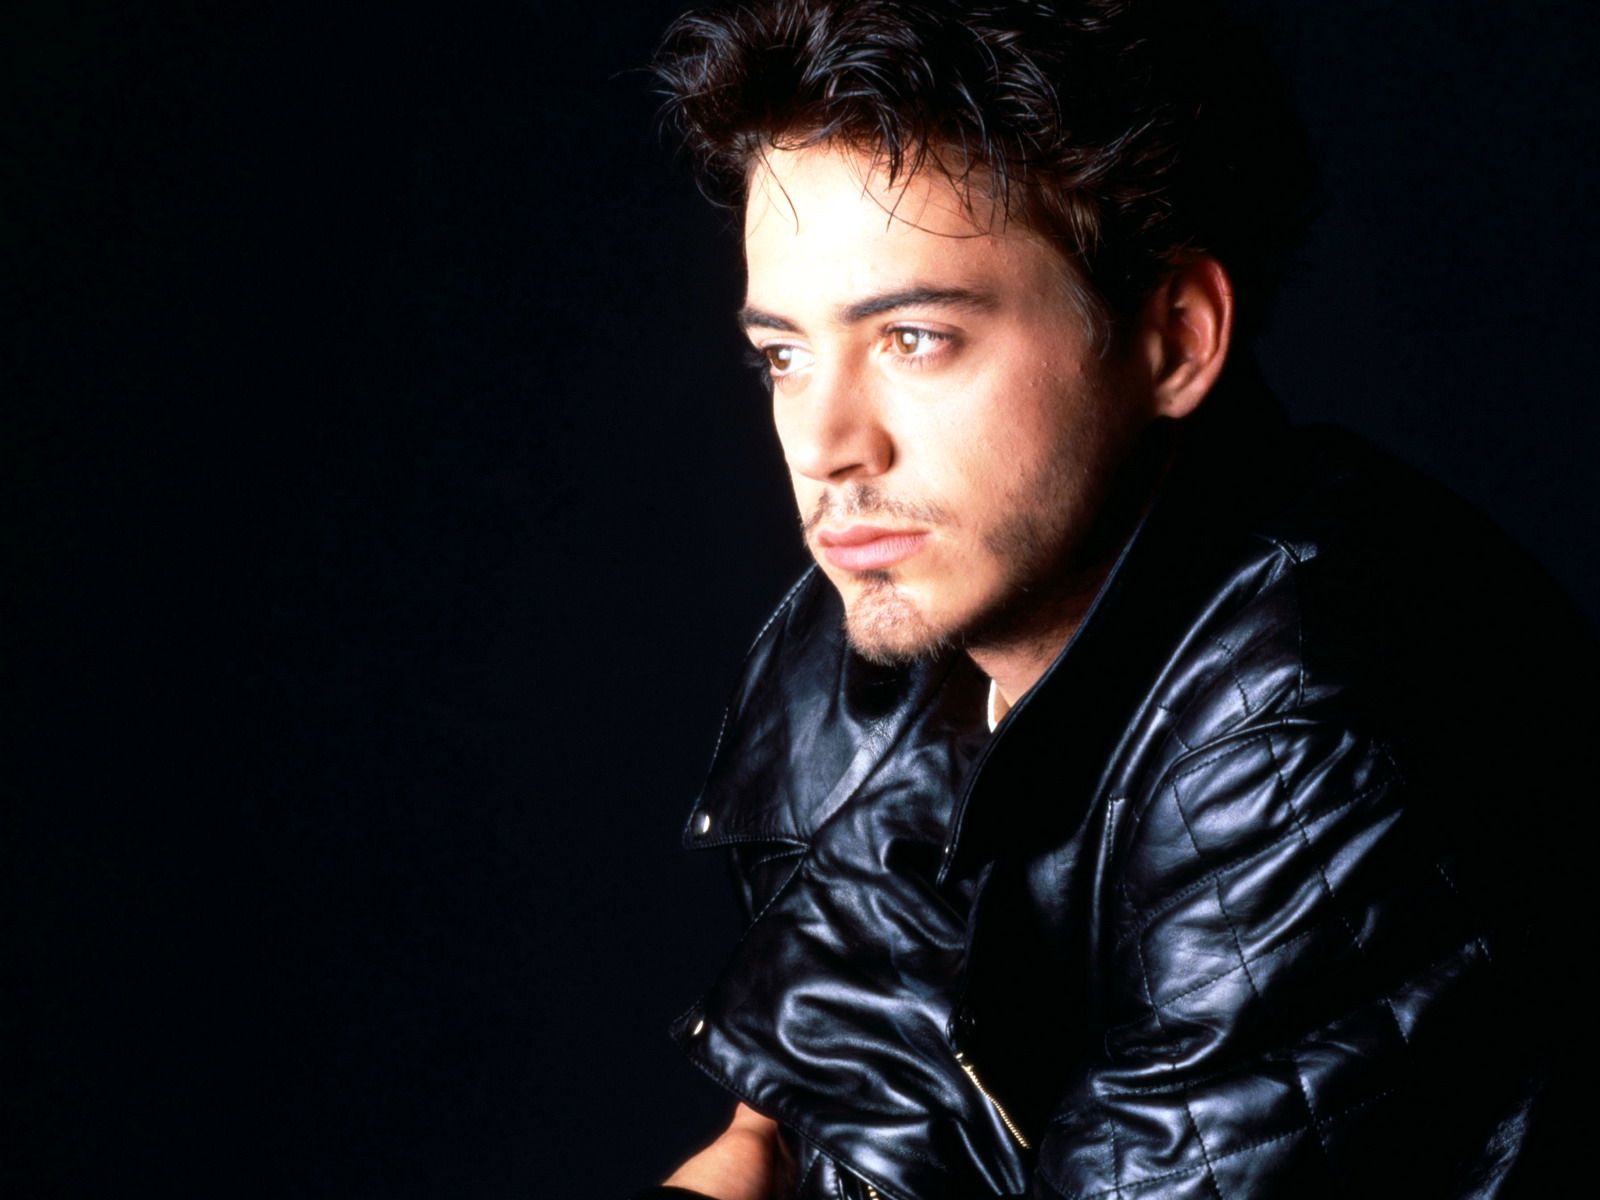 Robert Downey Jr. photos, pictures, stills, images, wallpapers ...